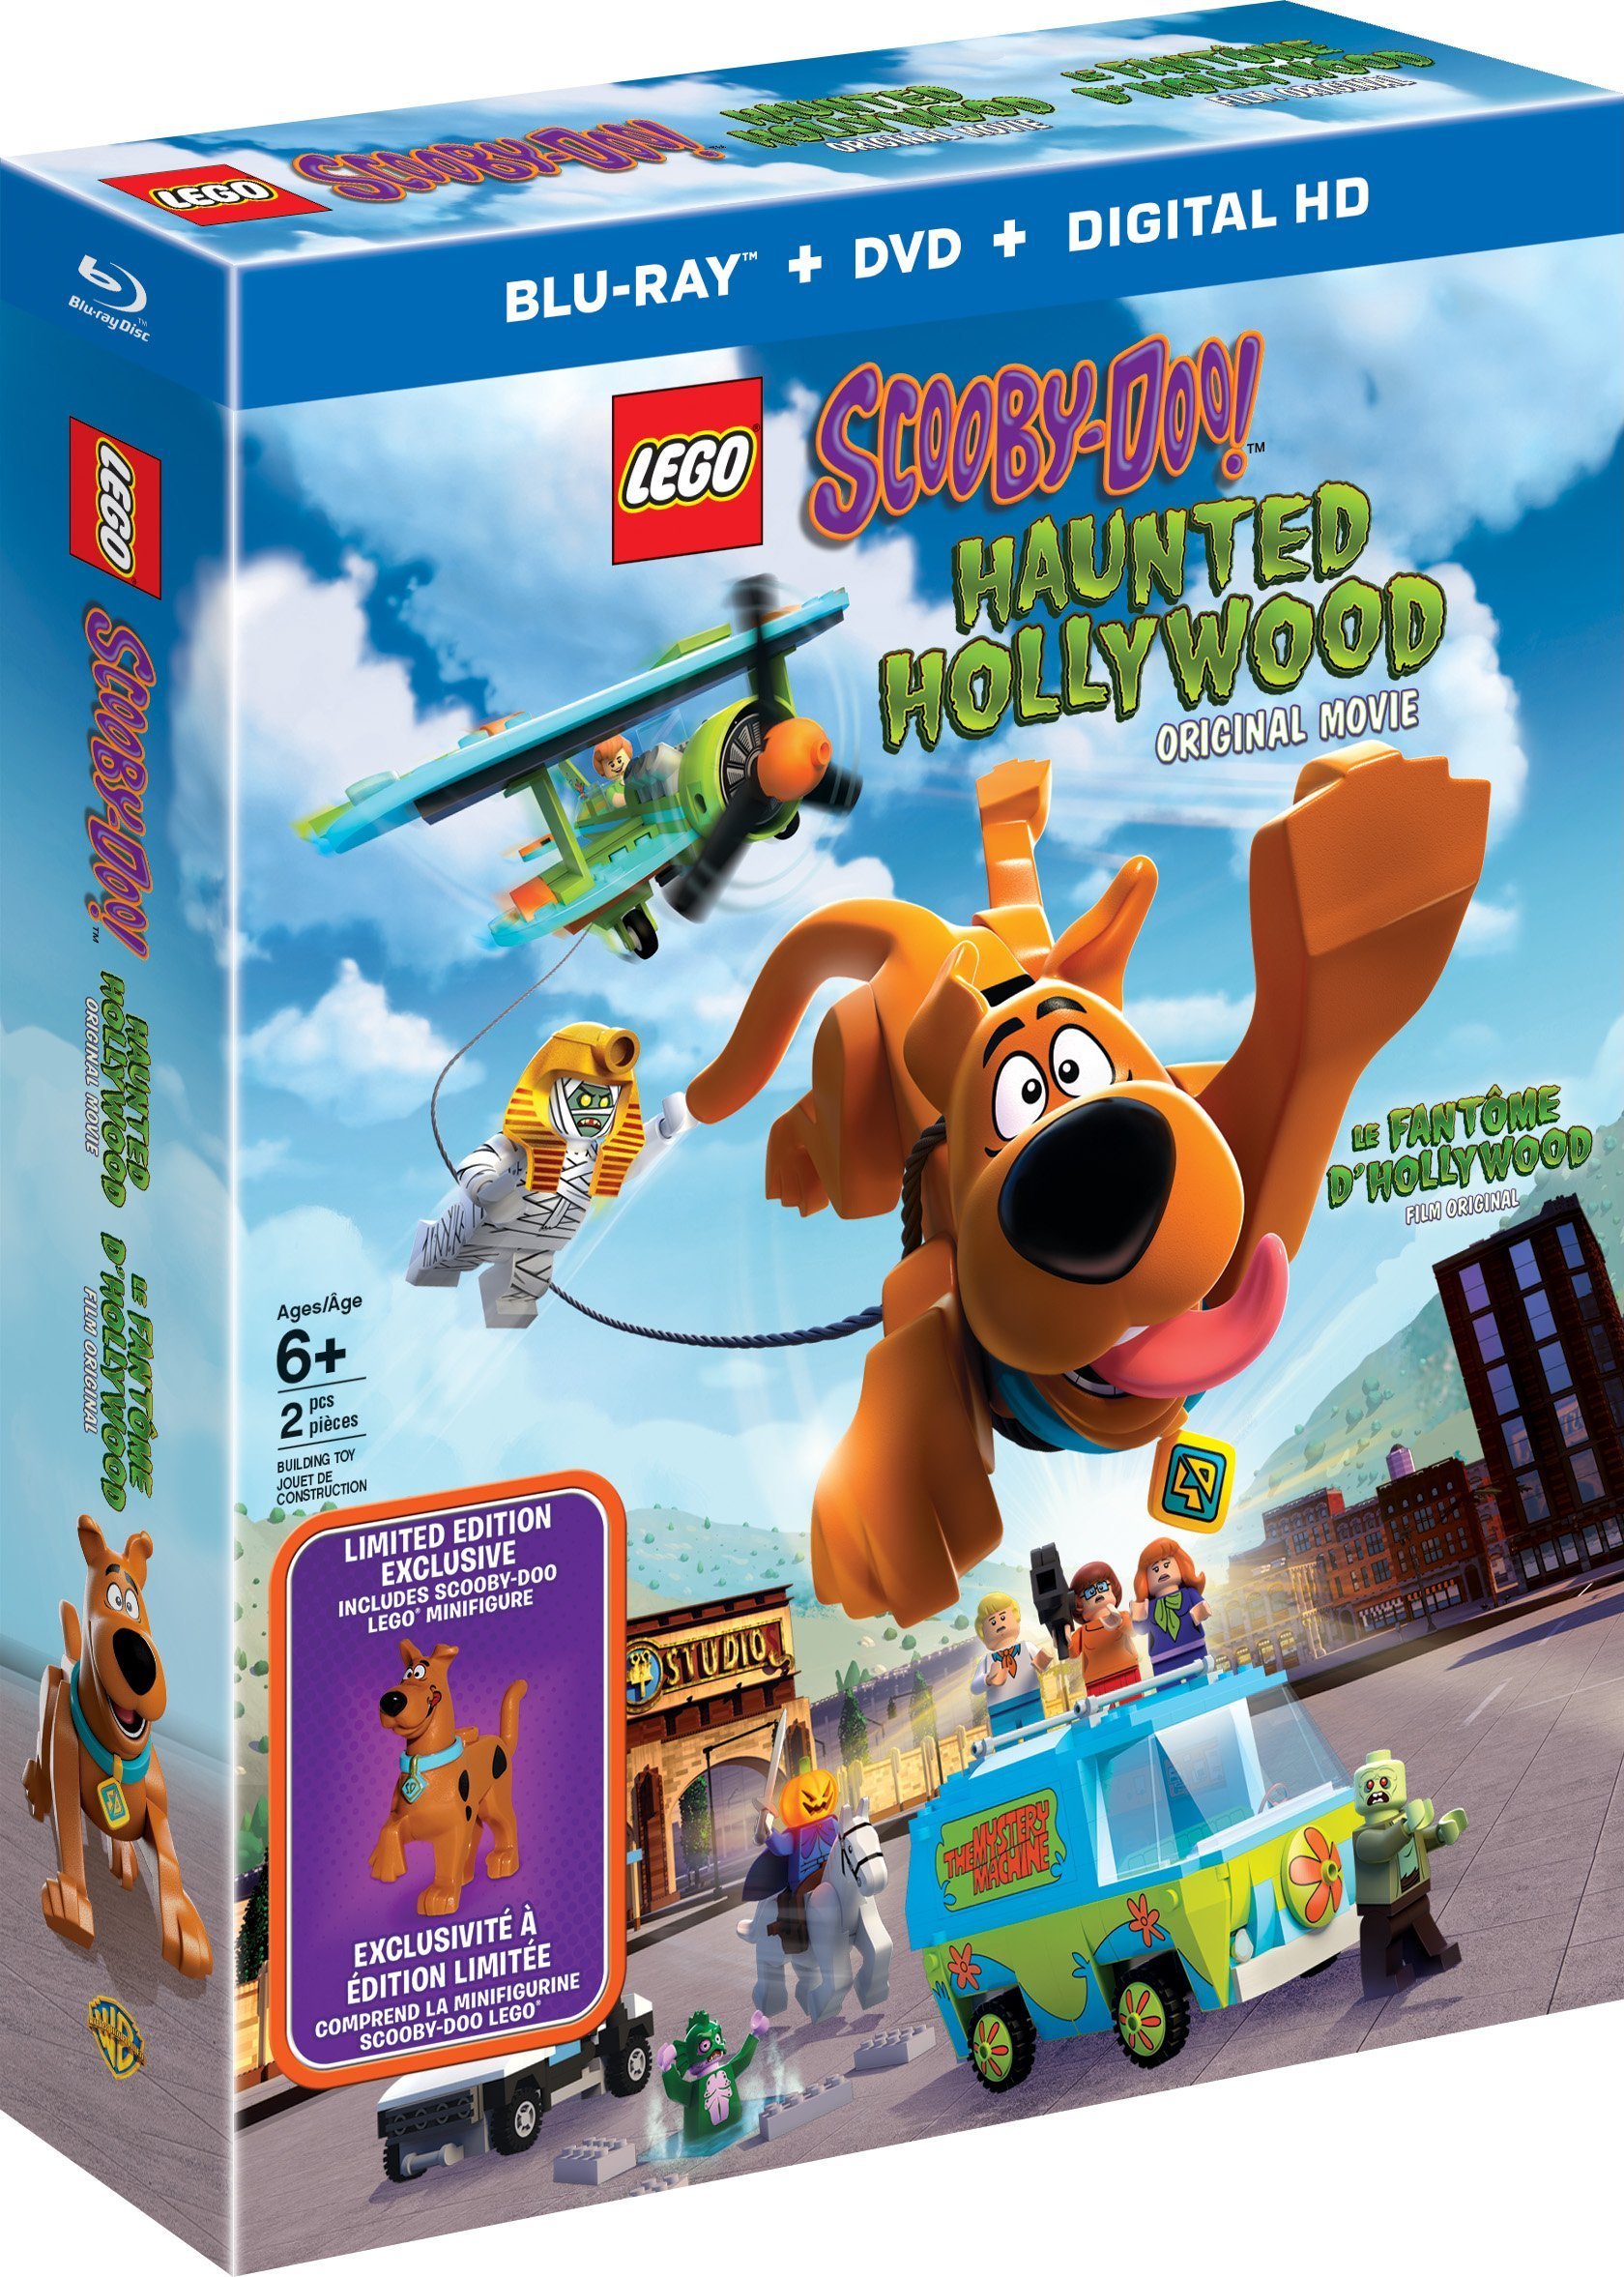 Lego Scooby-Doo!: Haunted Hollywood #6